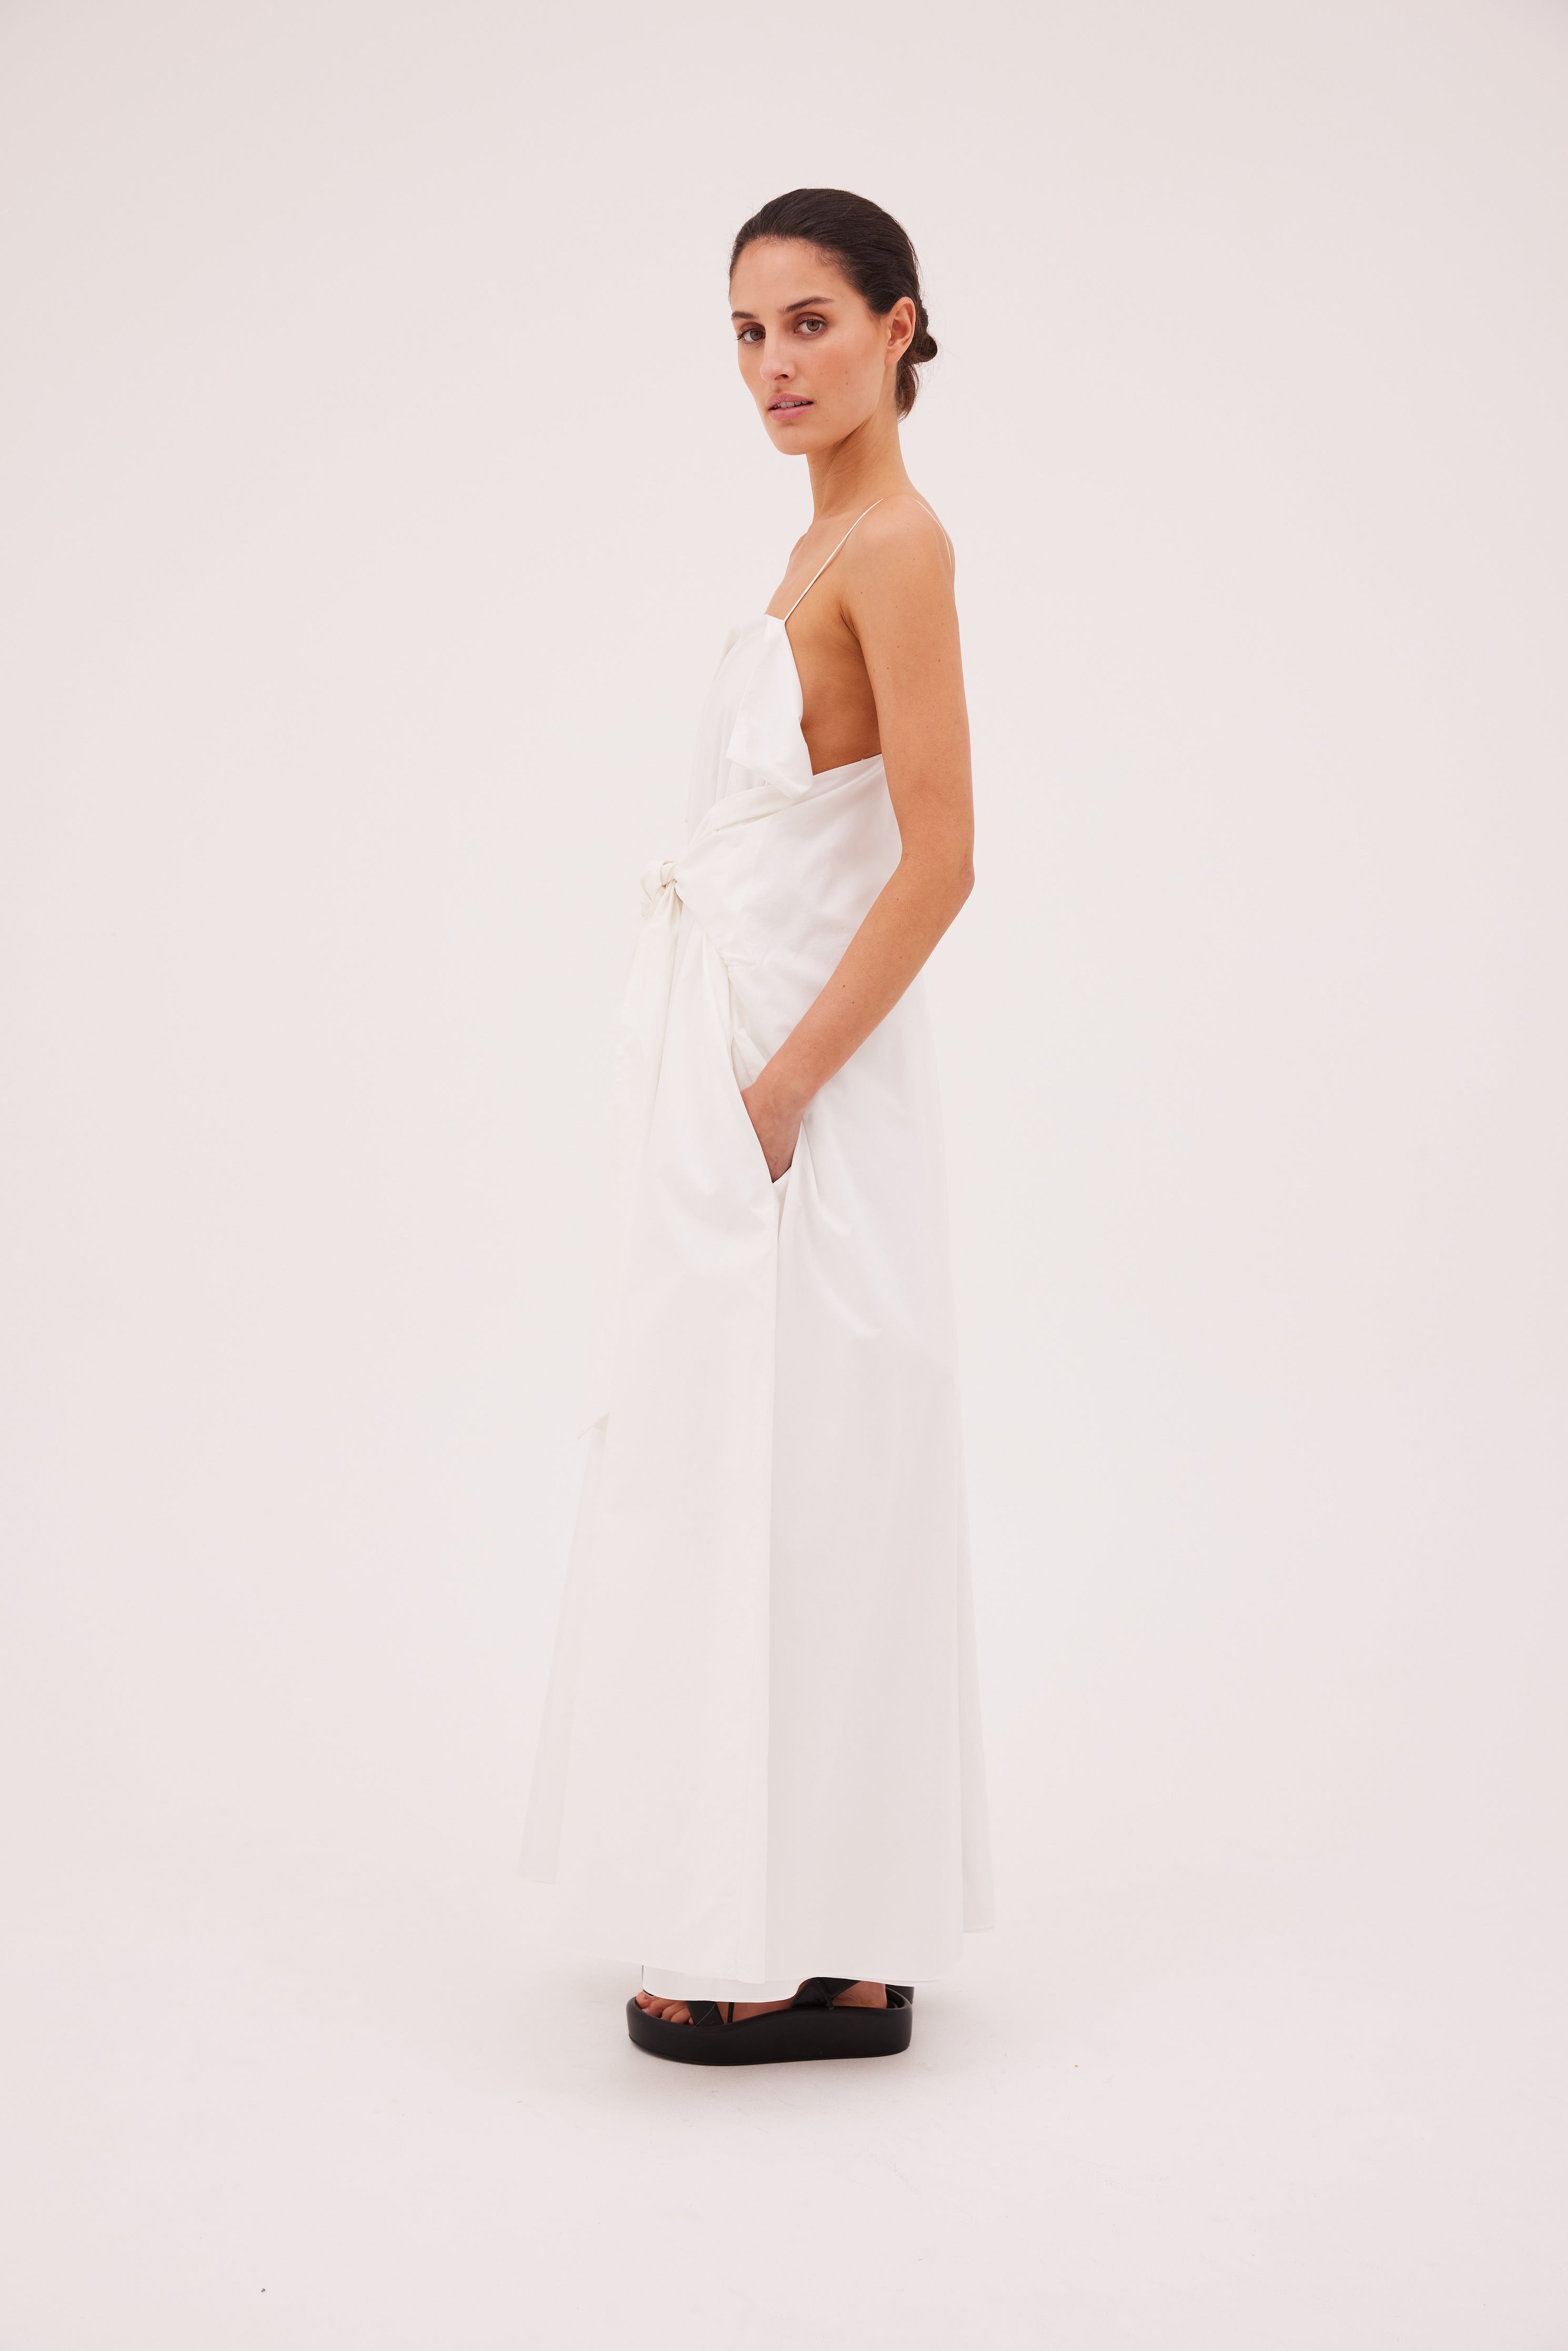 WHITE COTTON VALETTA DRESS – Bianca Spender